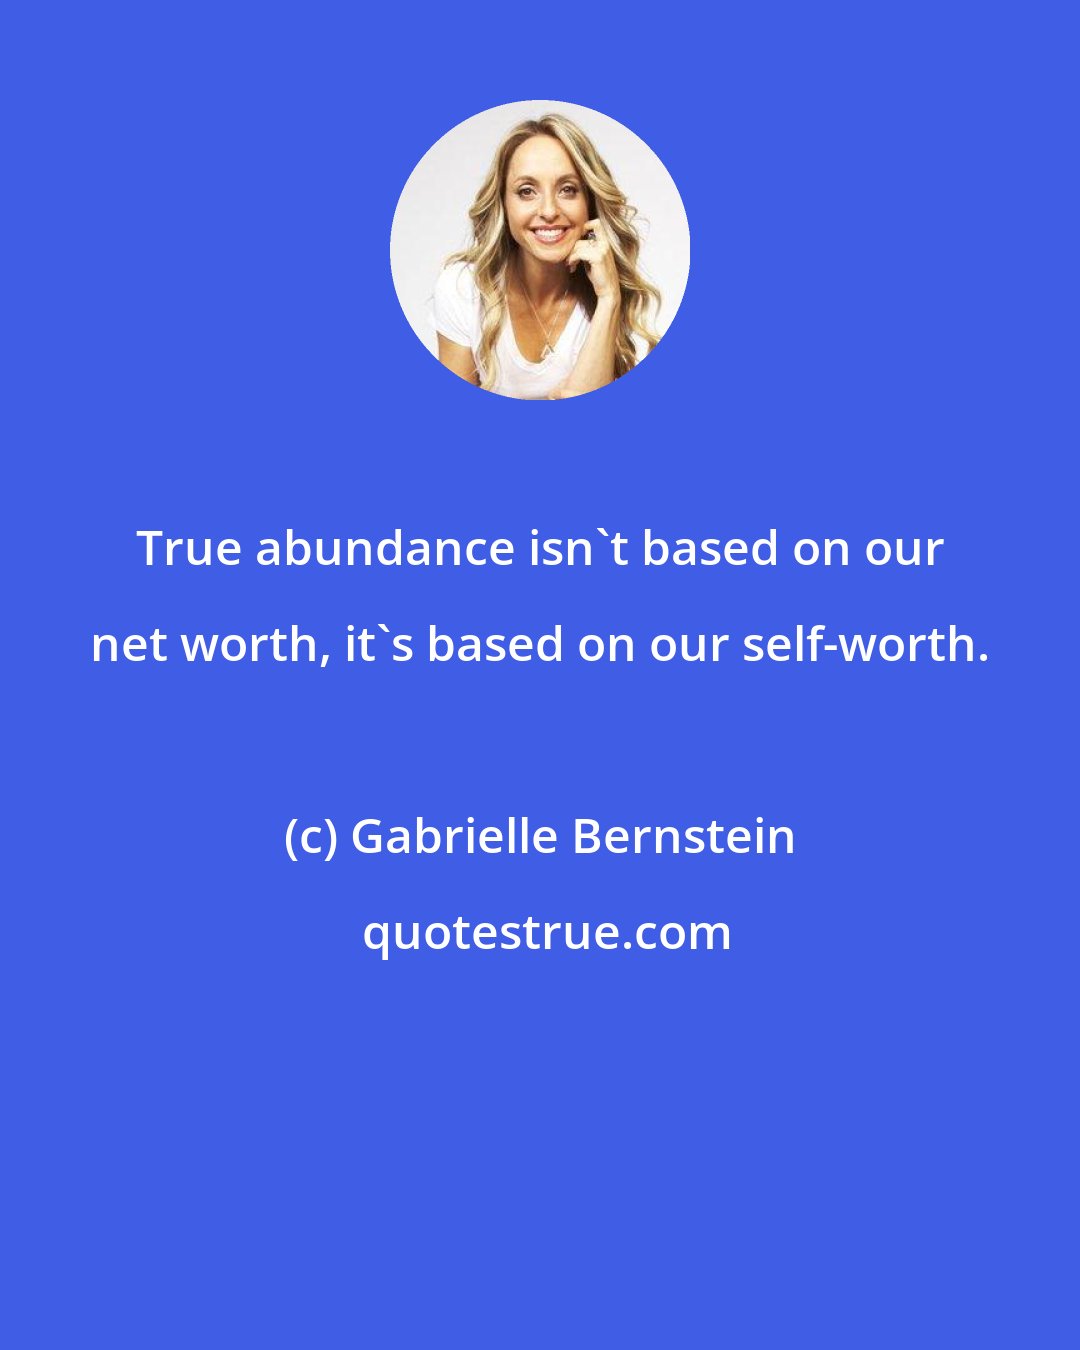 Gabrielle Bernstein: True abundance isn't based on our net worth, it's based on our self-worth.